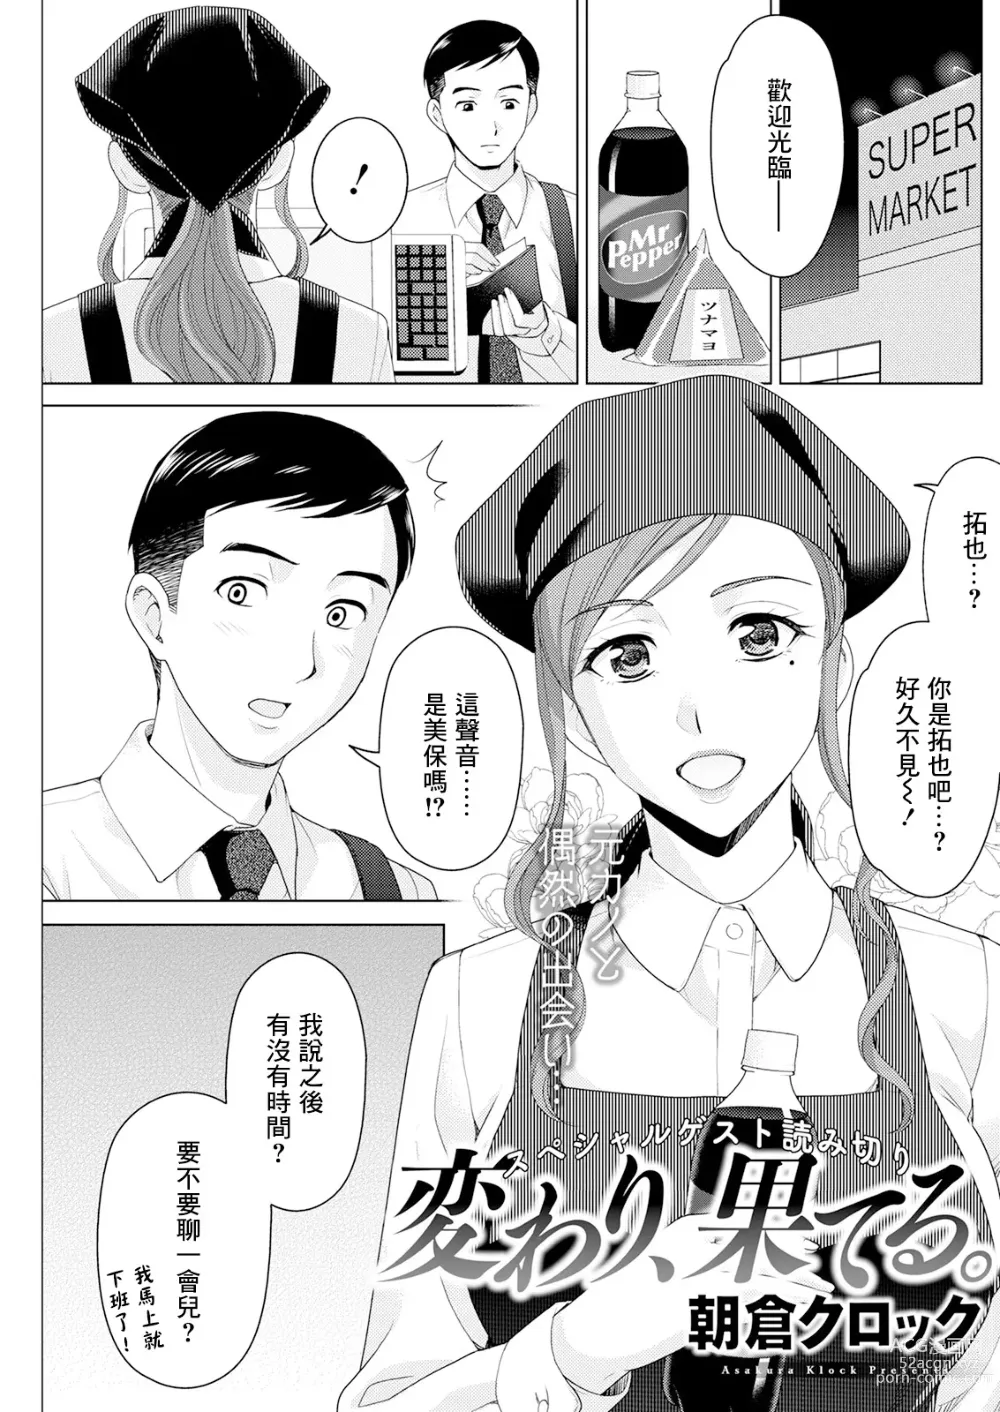 Page 1 of manga Kawari, Hateru.